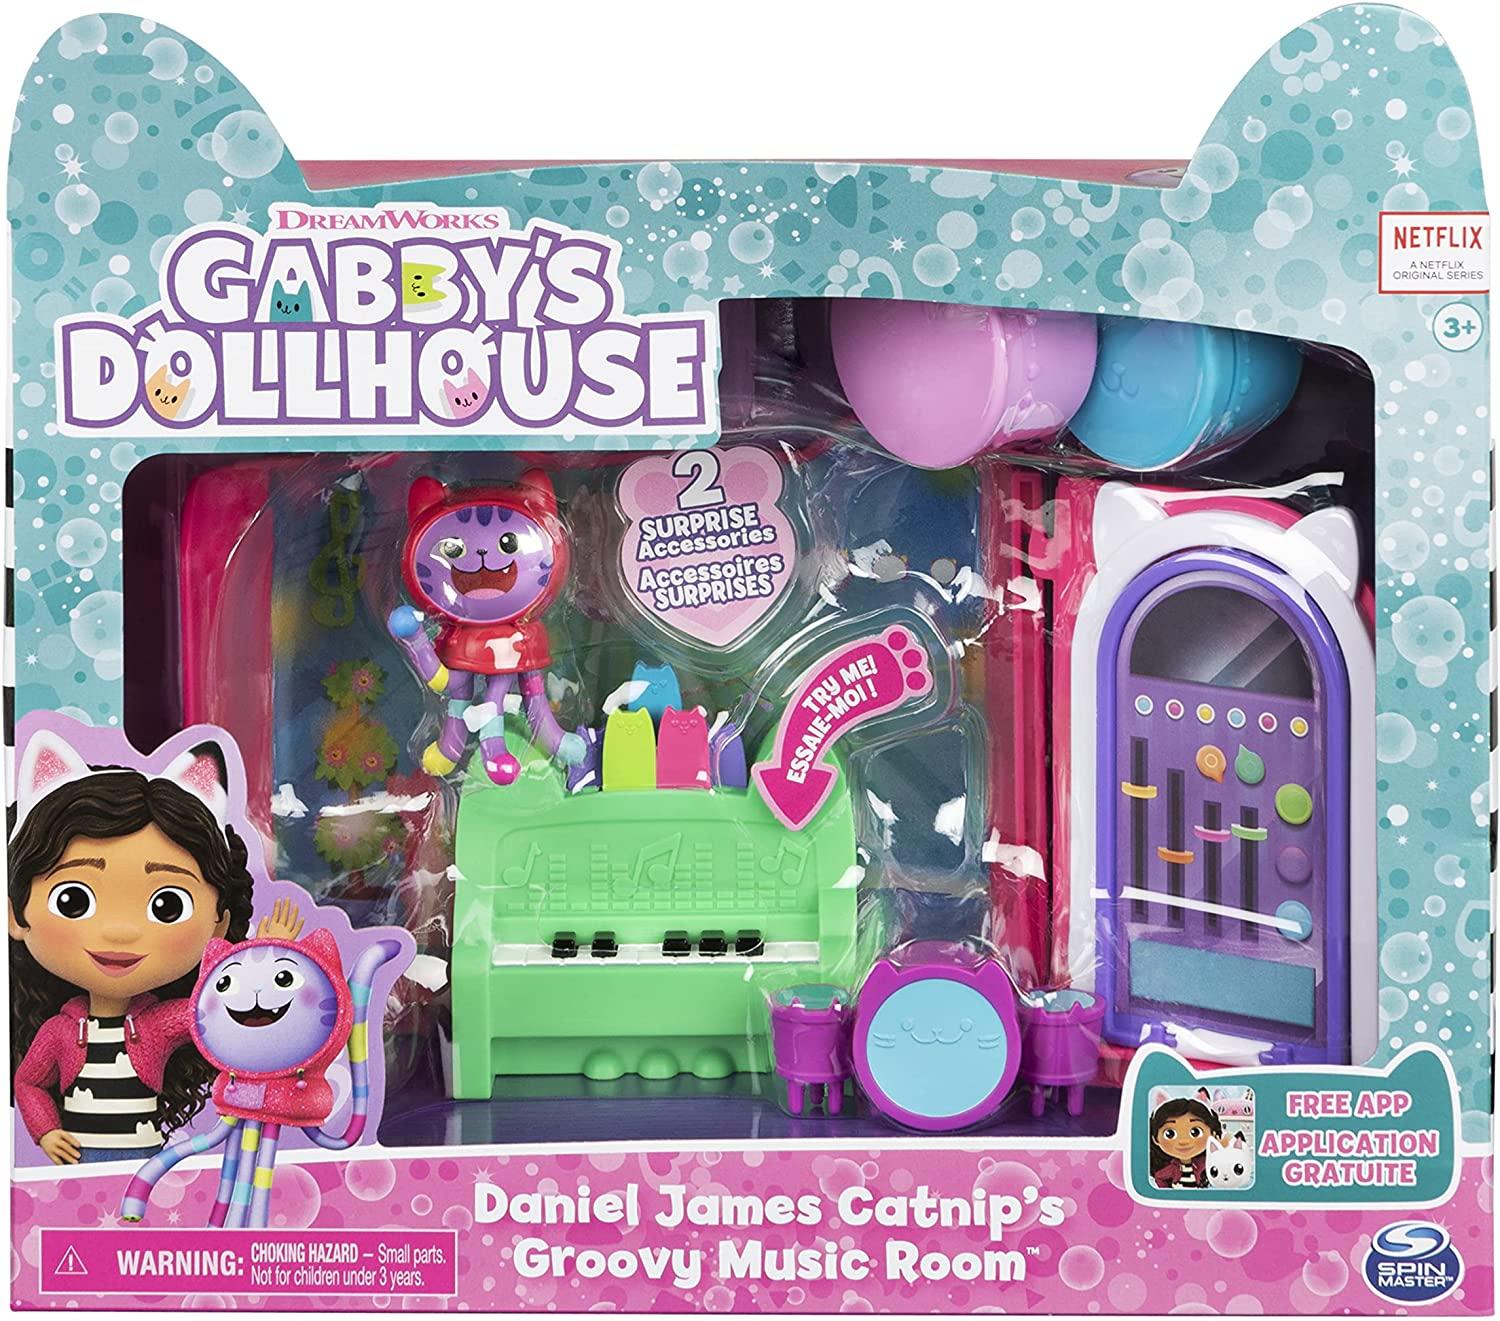 Gabby's Dollhouse, Groovy Music Room with Daniel James Catnip Figure